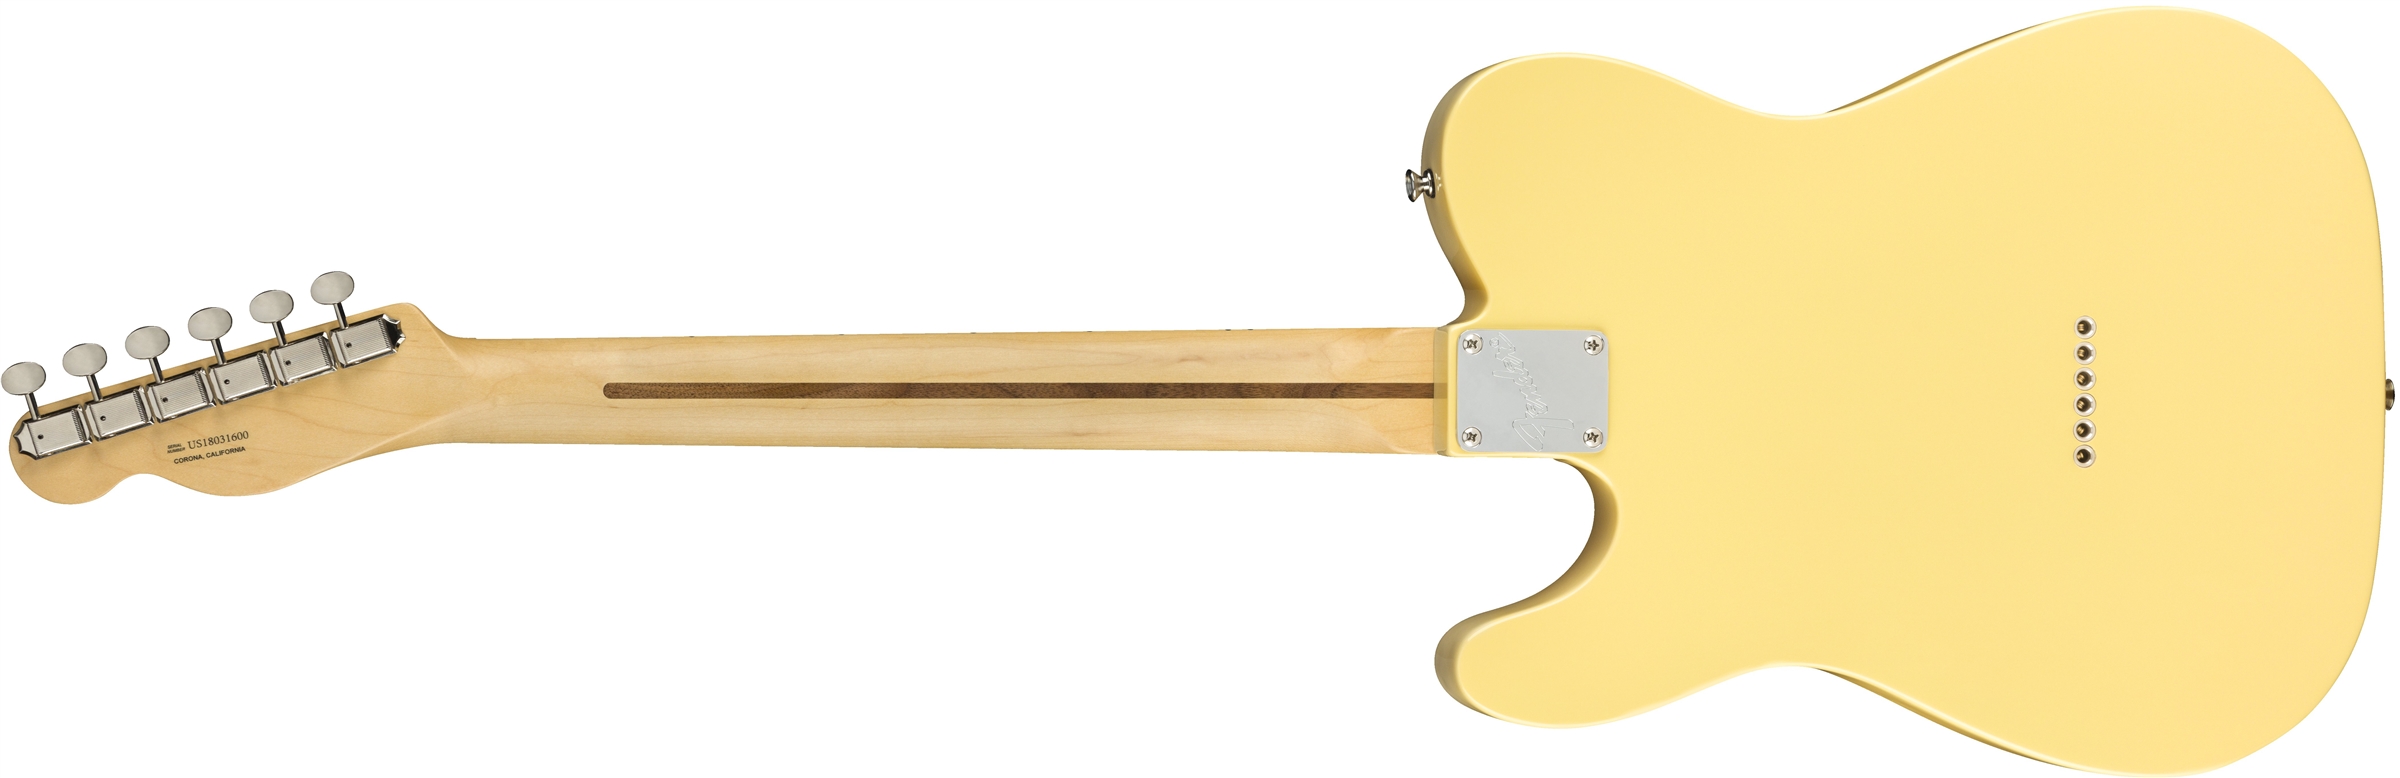 Fender Tele American Performer Usa Mn - Vintage White - Televorm elektrische gitaar - Variation 1